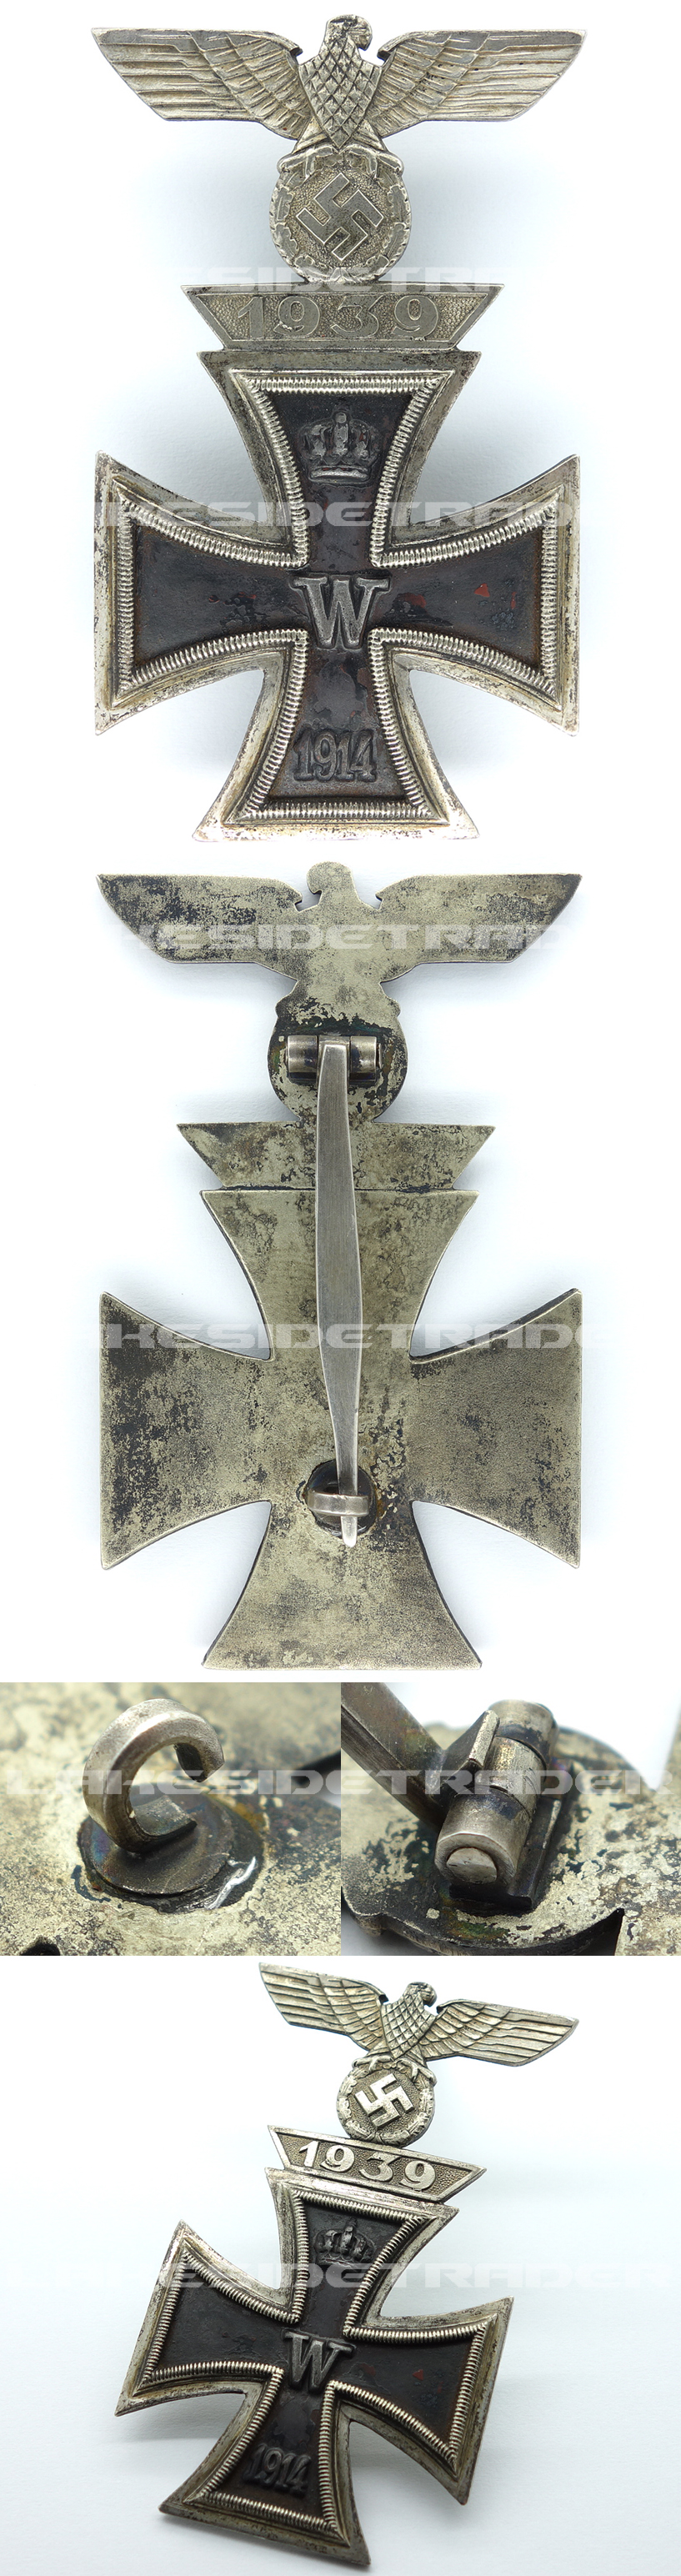 1st Class Iron Cross 1914 and Spange 1939 Combo